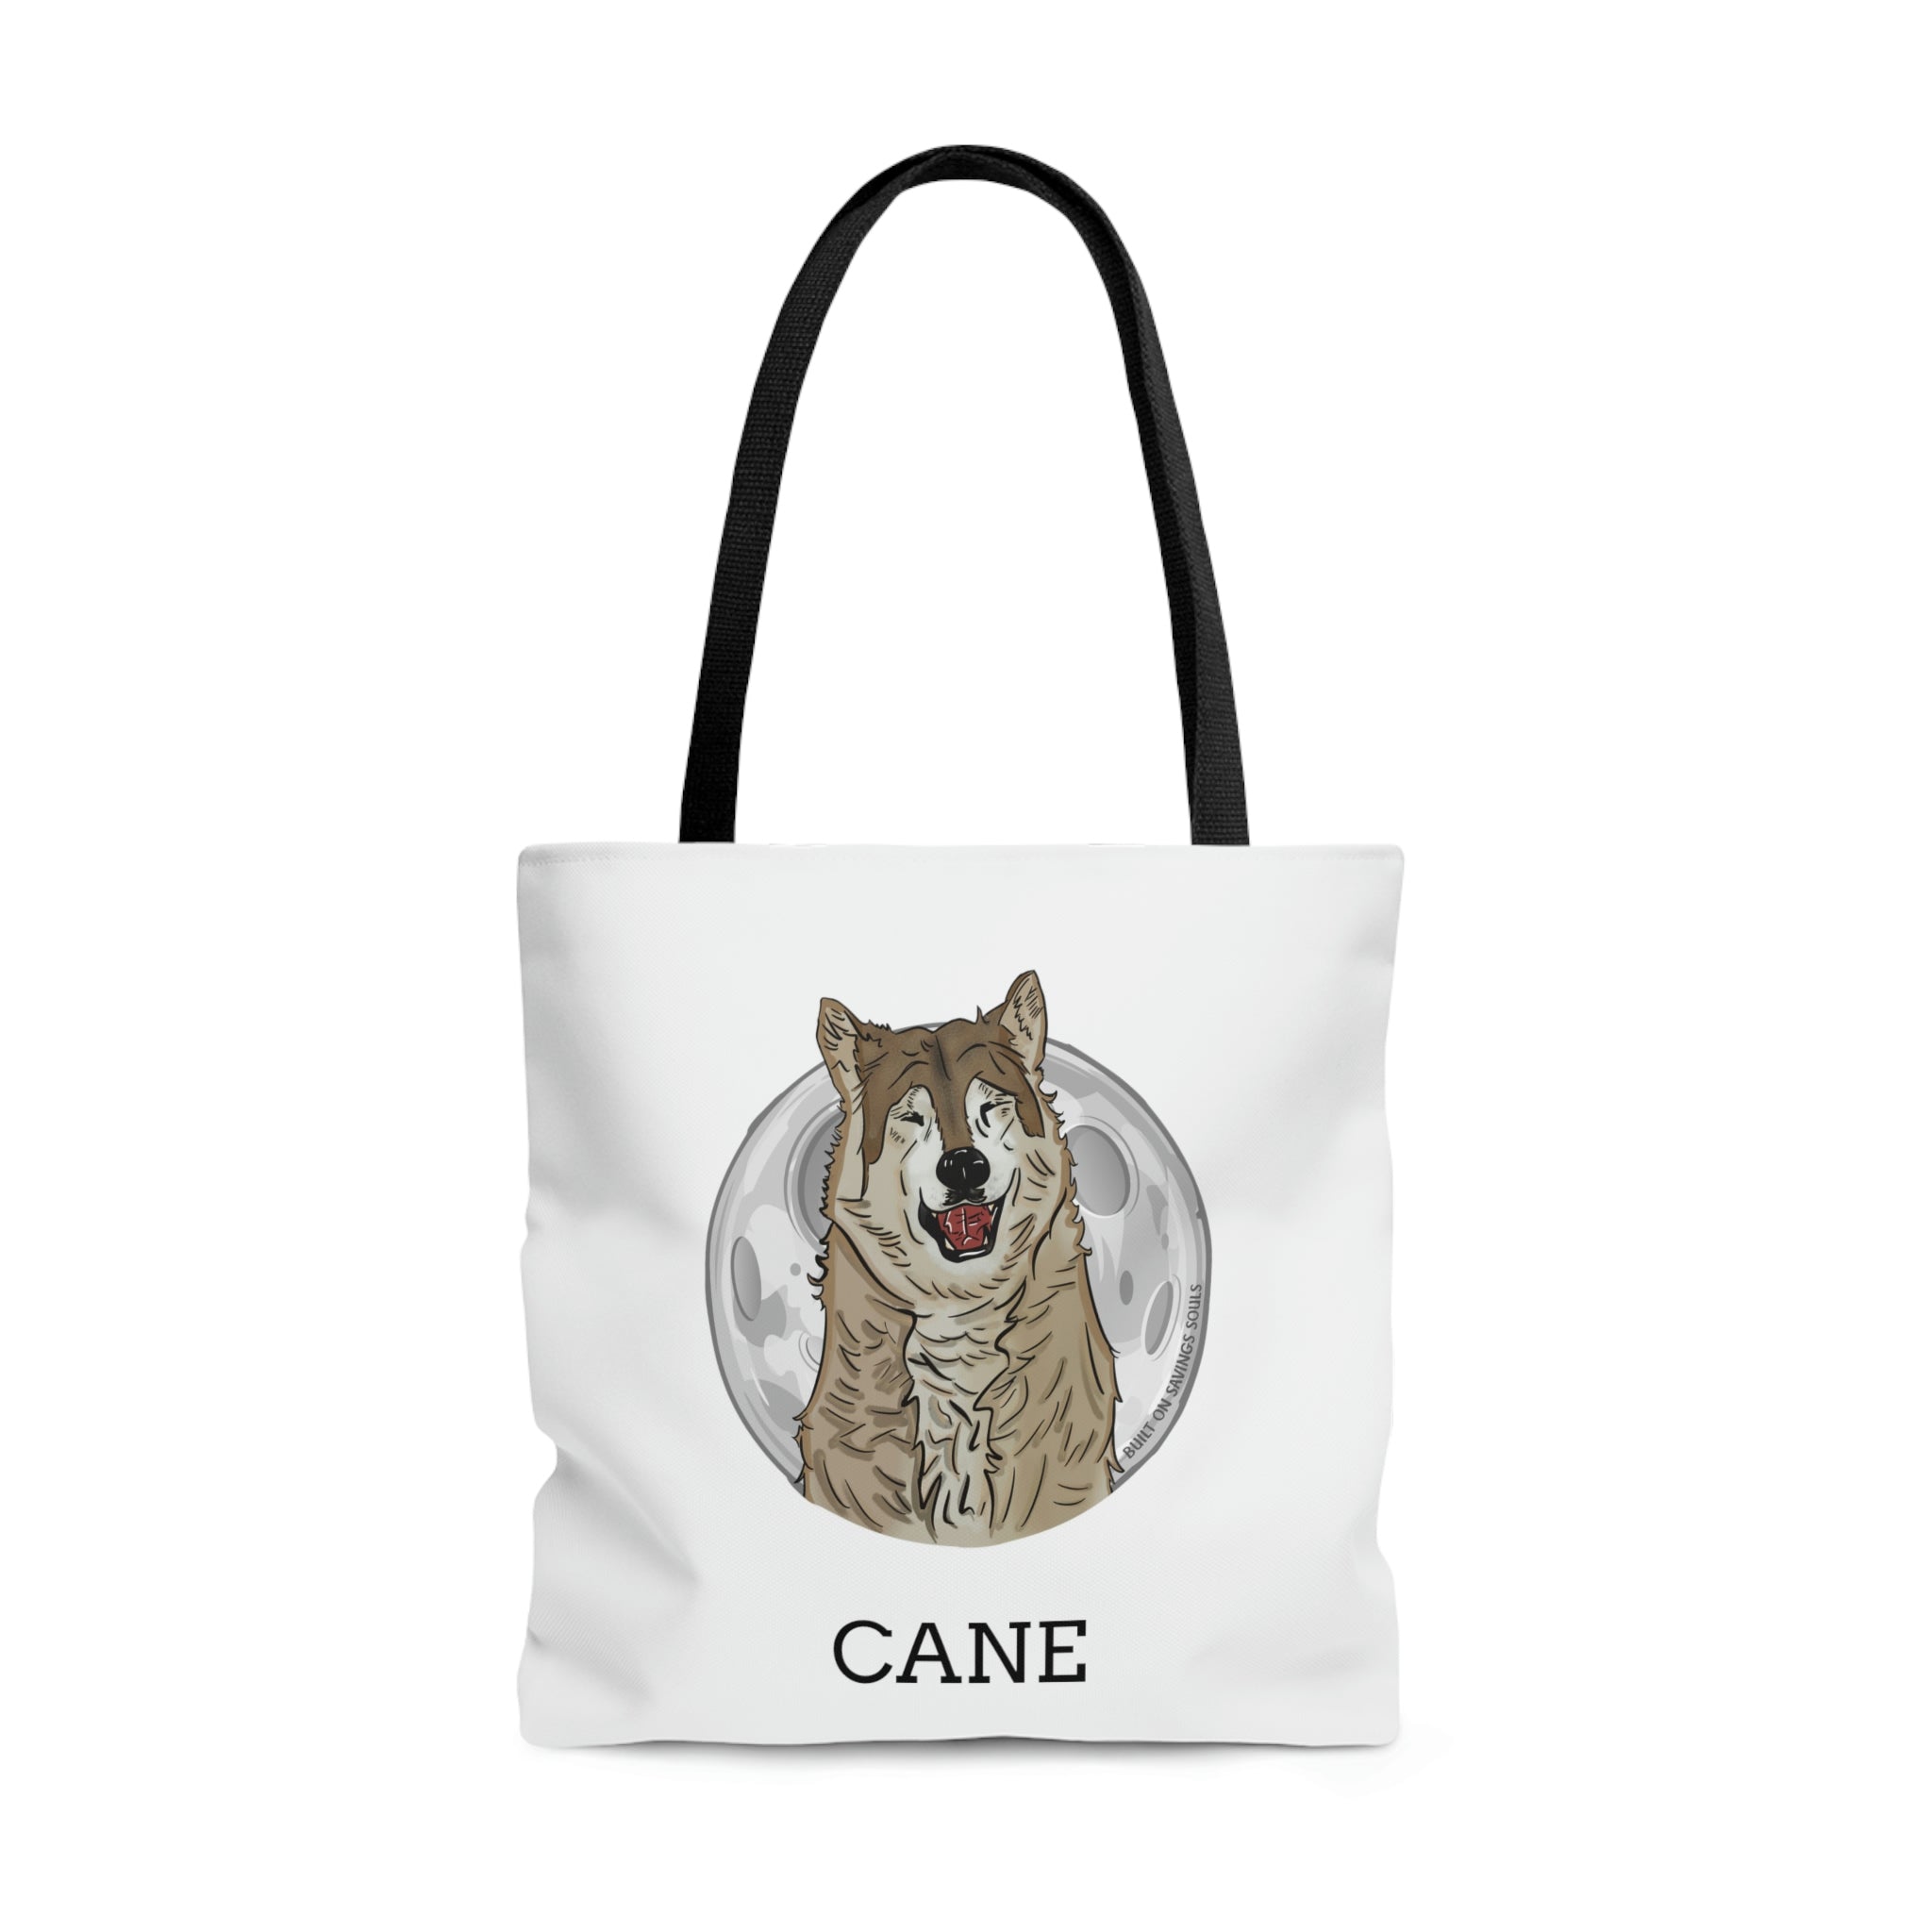 Cane Tote Bag